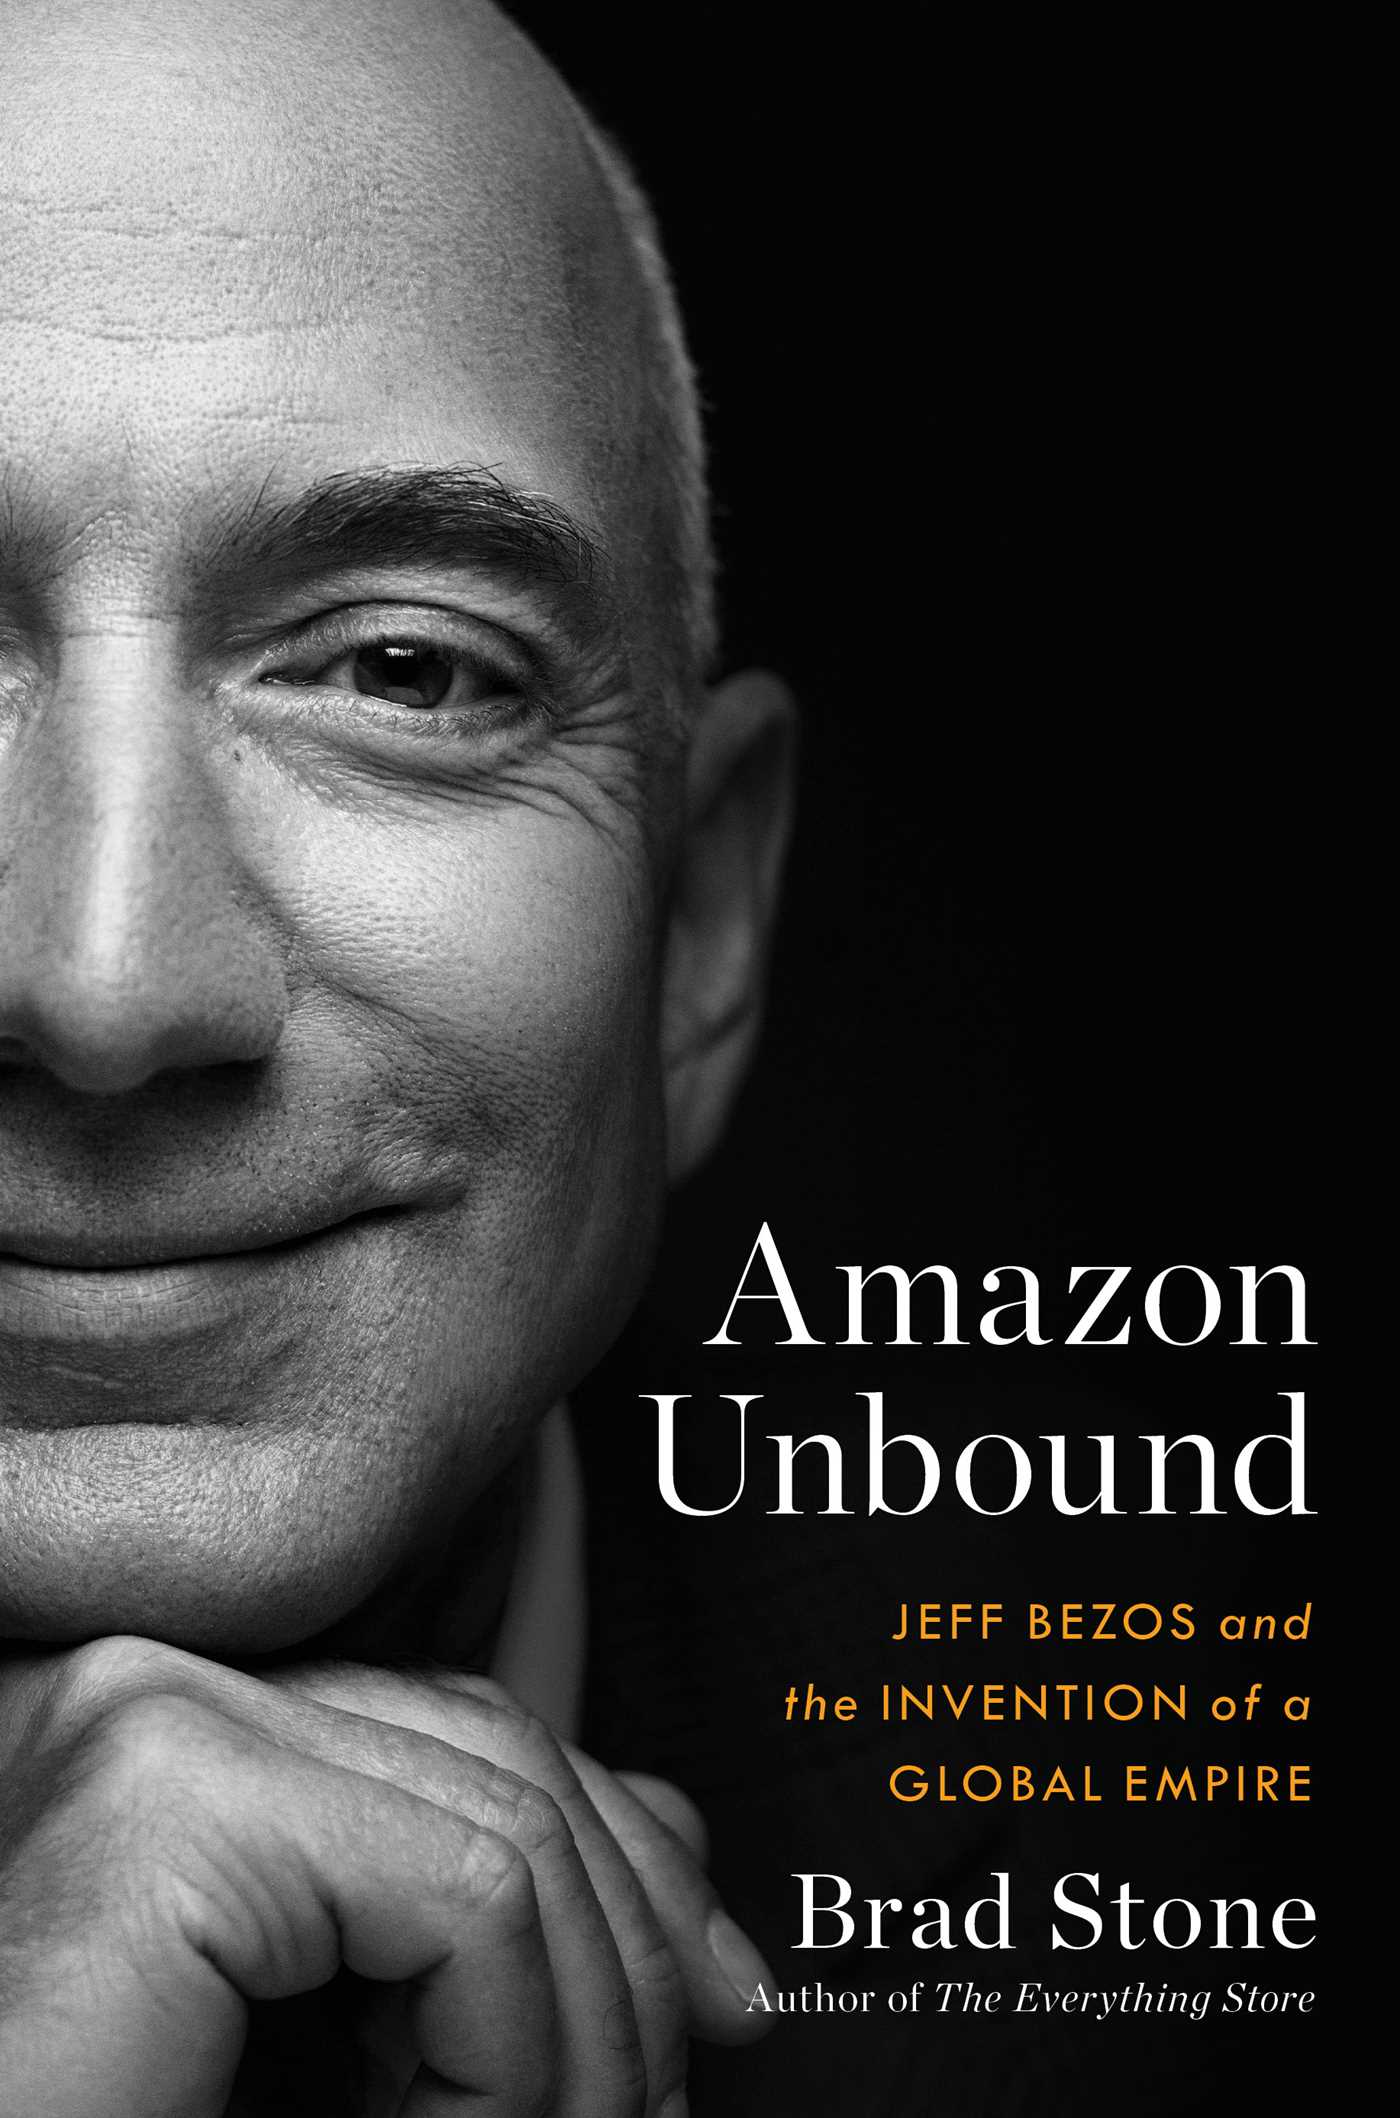 Image for "Amazon Unbound"